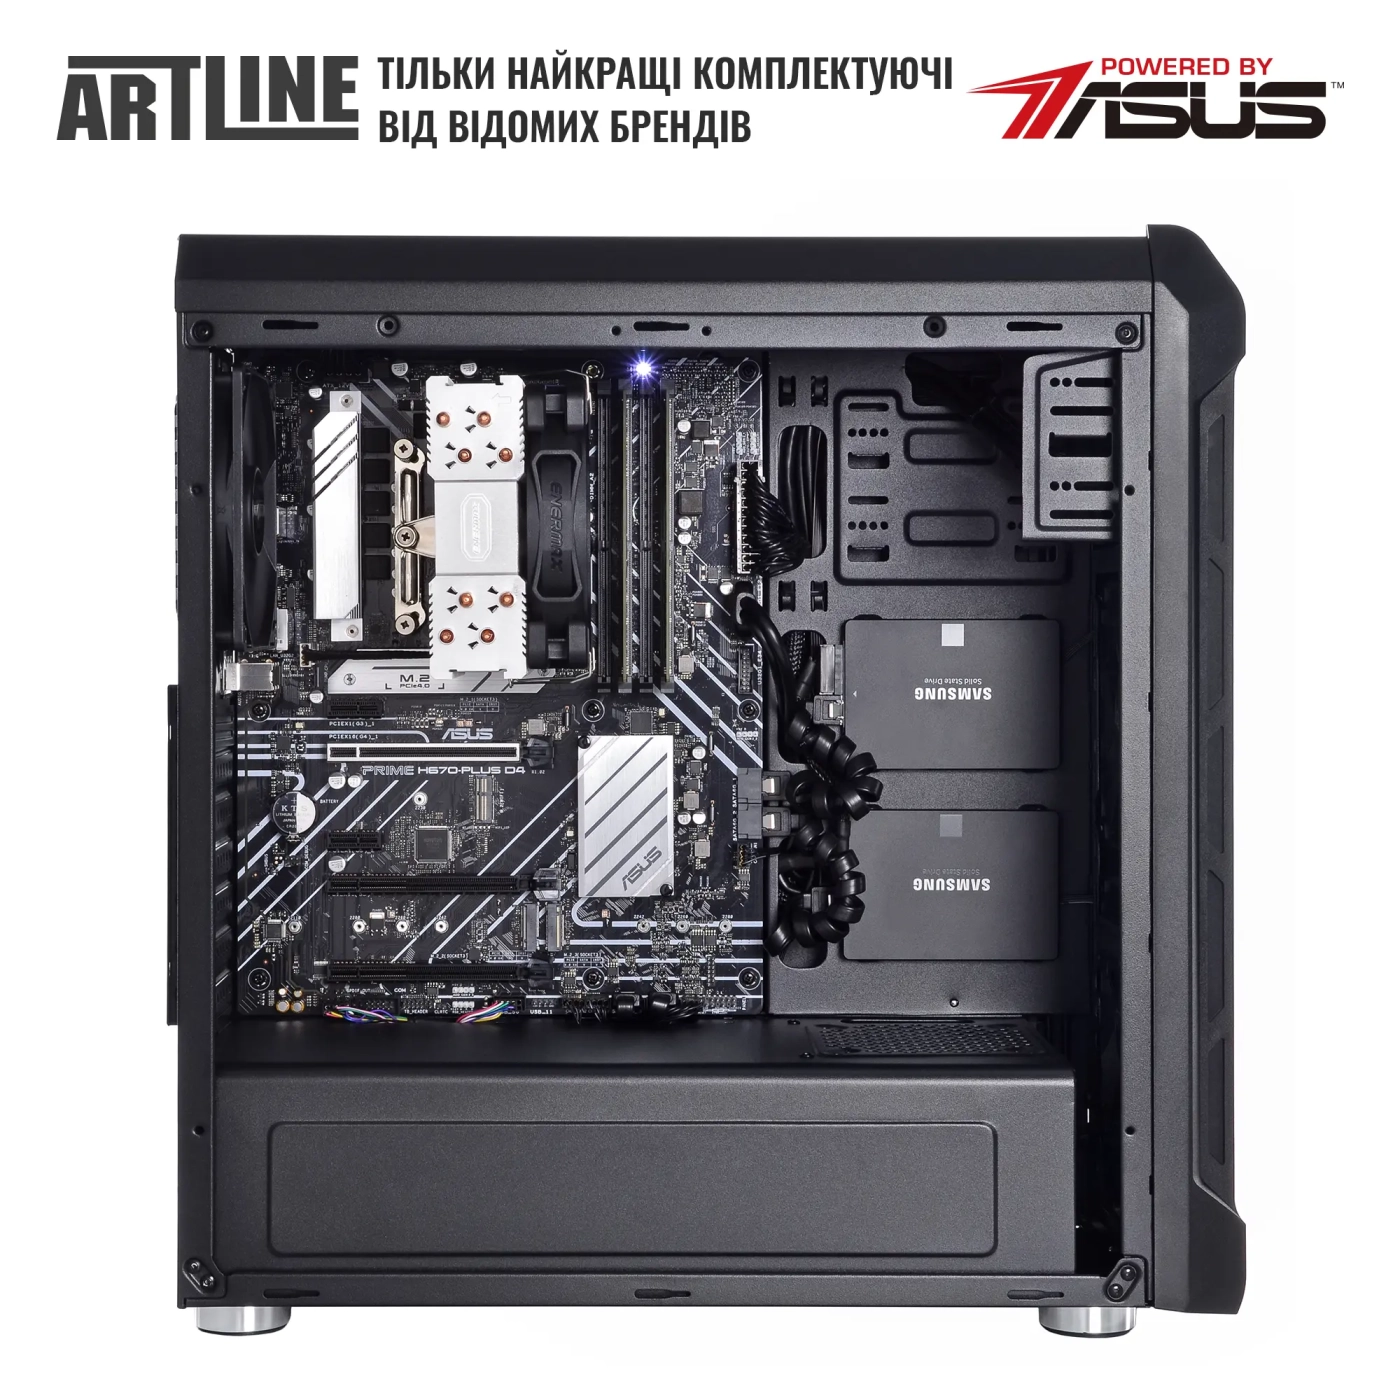 Купити Сервер ARTLINE Business T27 (T27v31) - фото 4